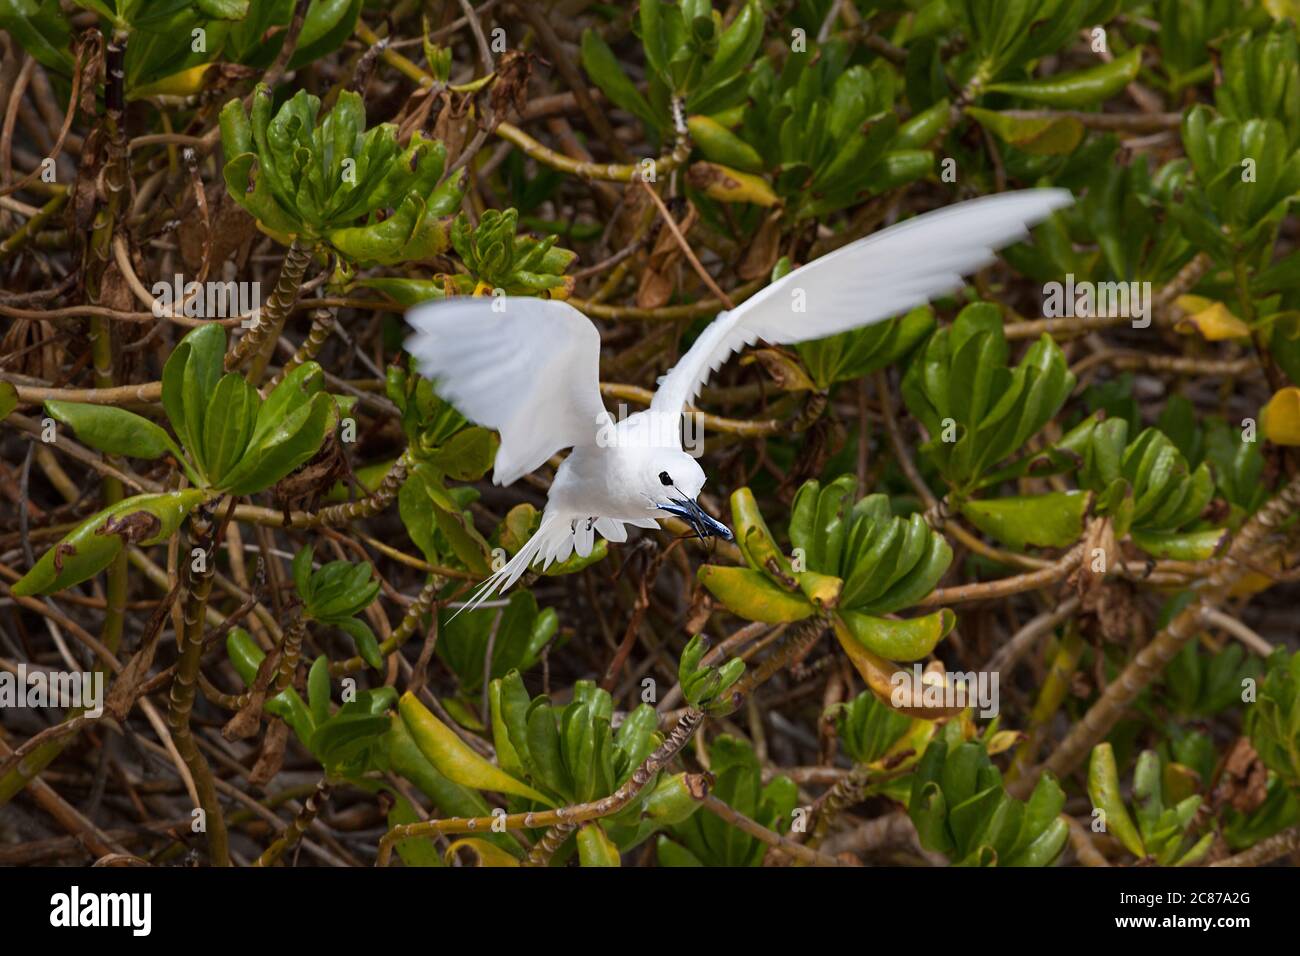 Terna bianca o terna da fata, Gygis alba rothschildi, con un giovane pesce volante nel suo becco, Sand Island, Midway Atoll National Wildlife Refuge, USA Foto Stock